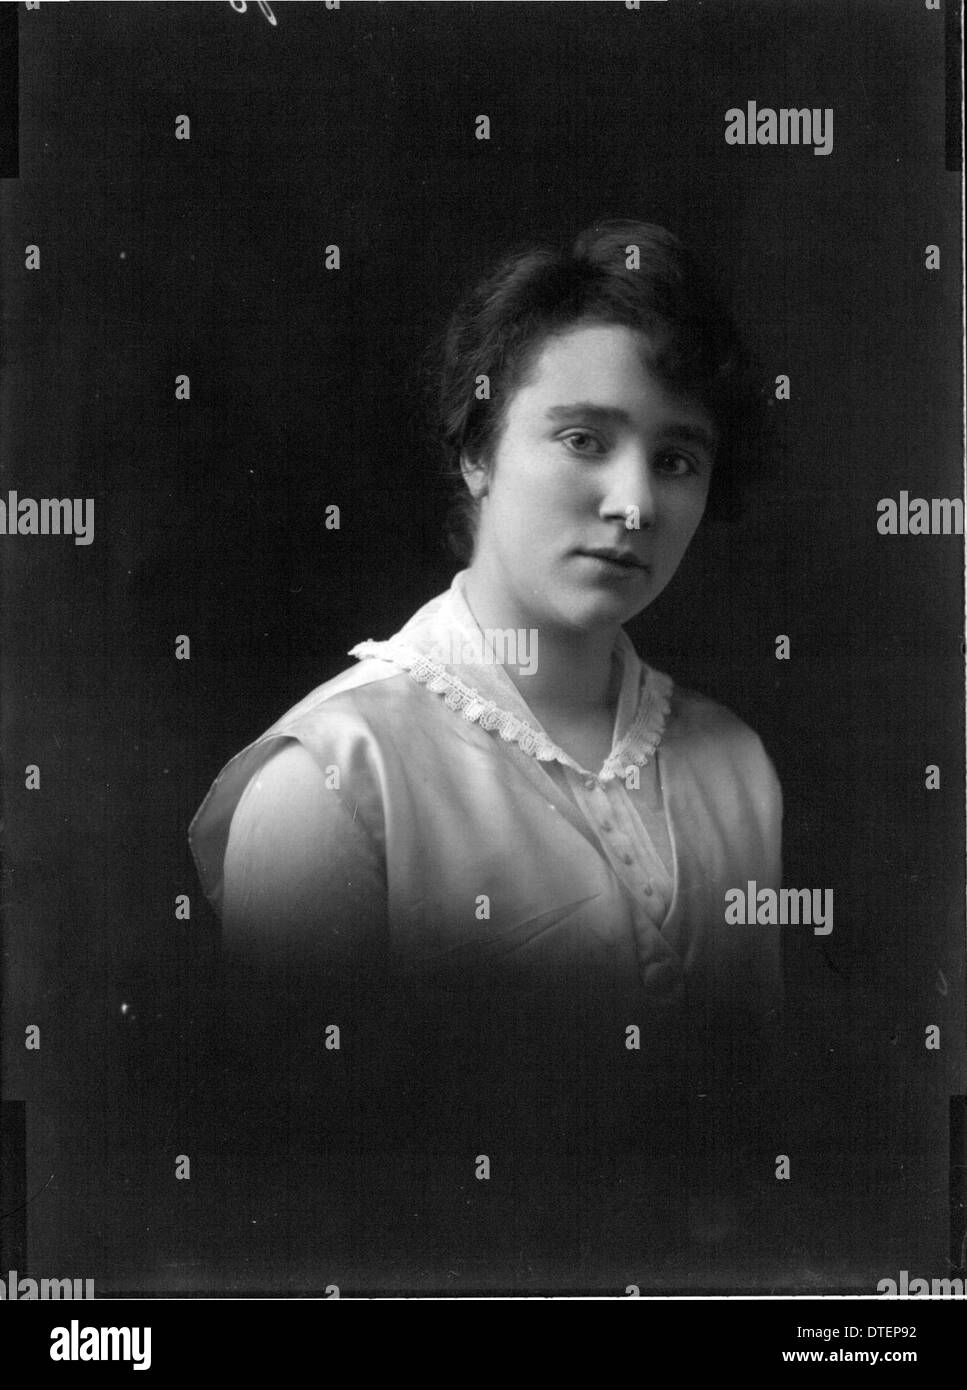 Elizabeth snyder Black and White Stock Photos & Images - Alamy